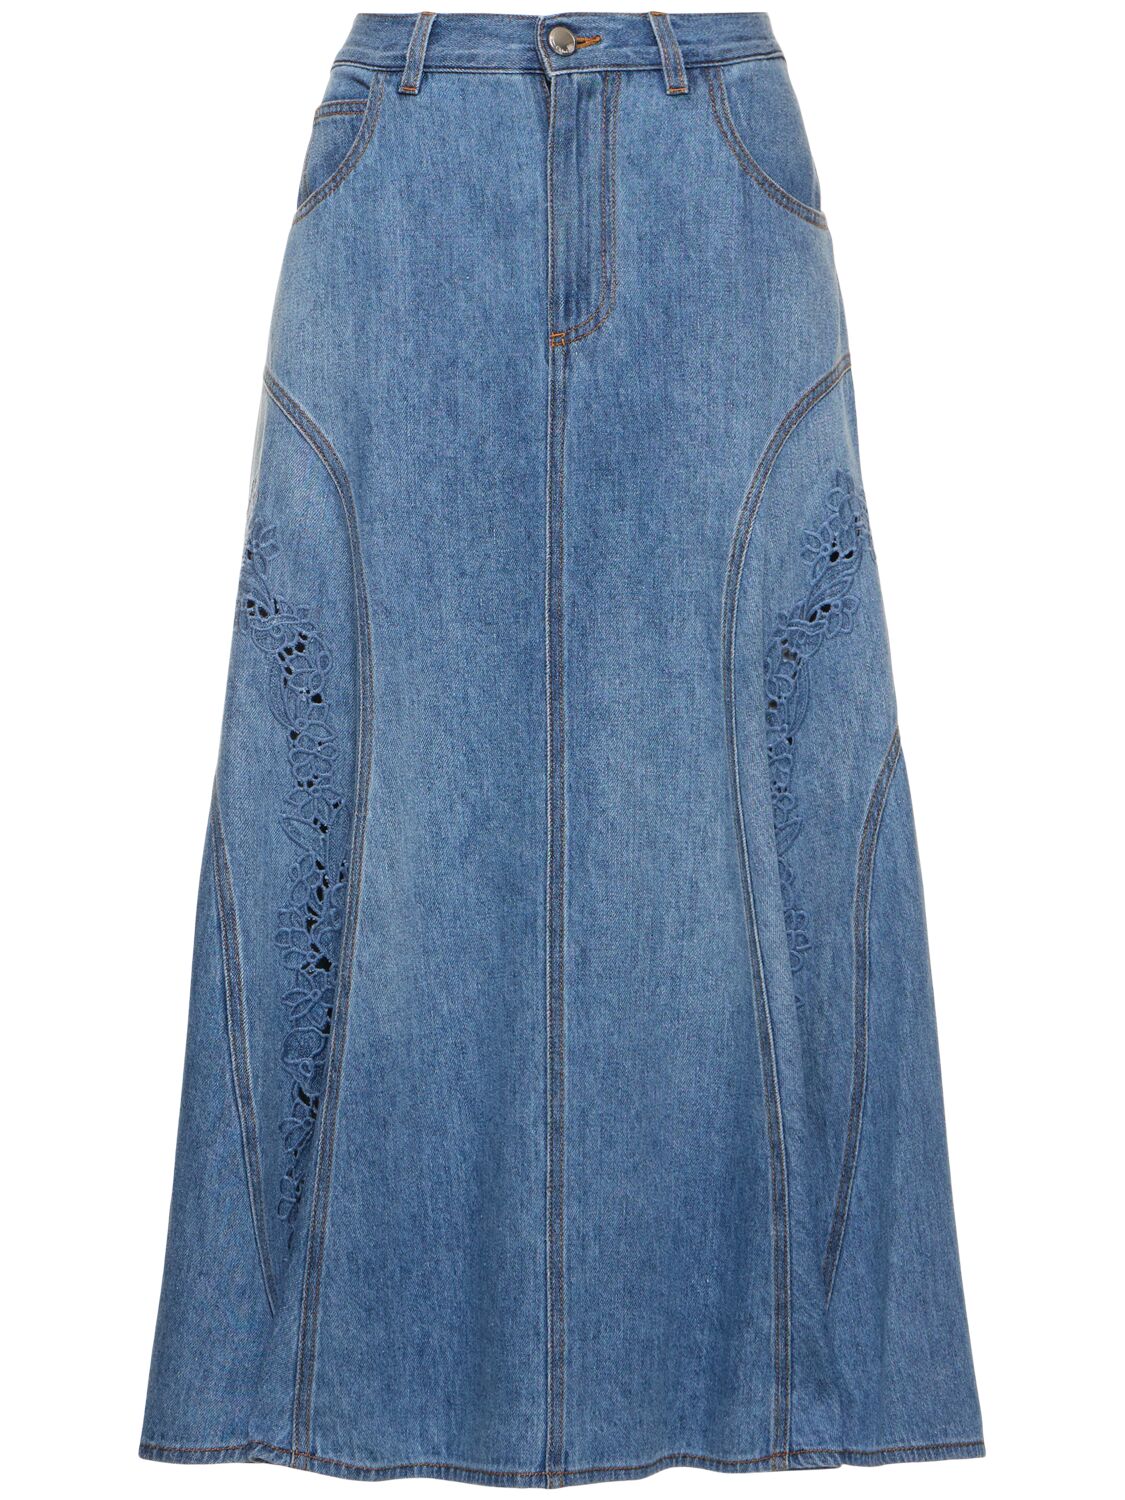 CHLOÉ Cotton & Linen Embroidered Midi Skirt